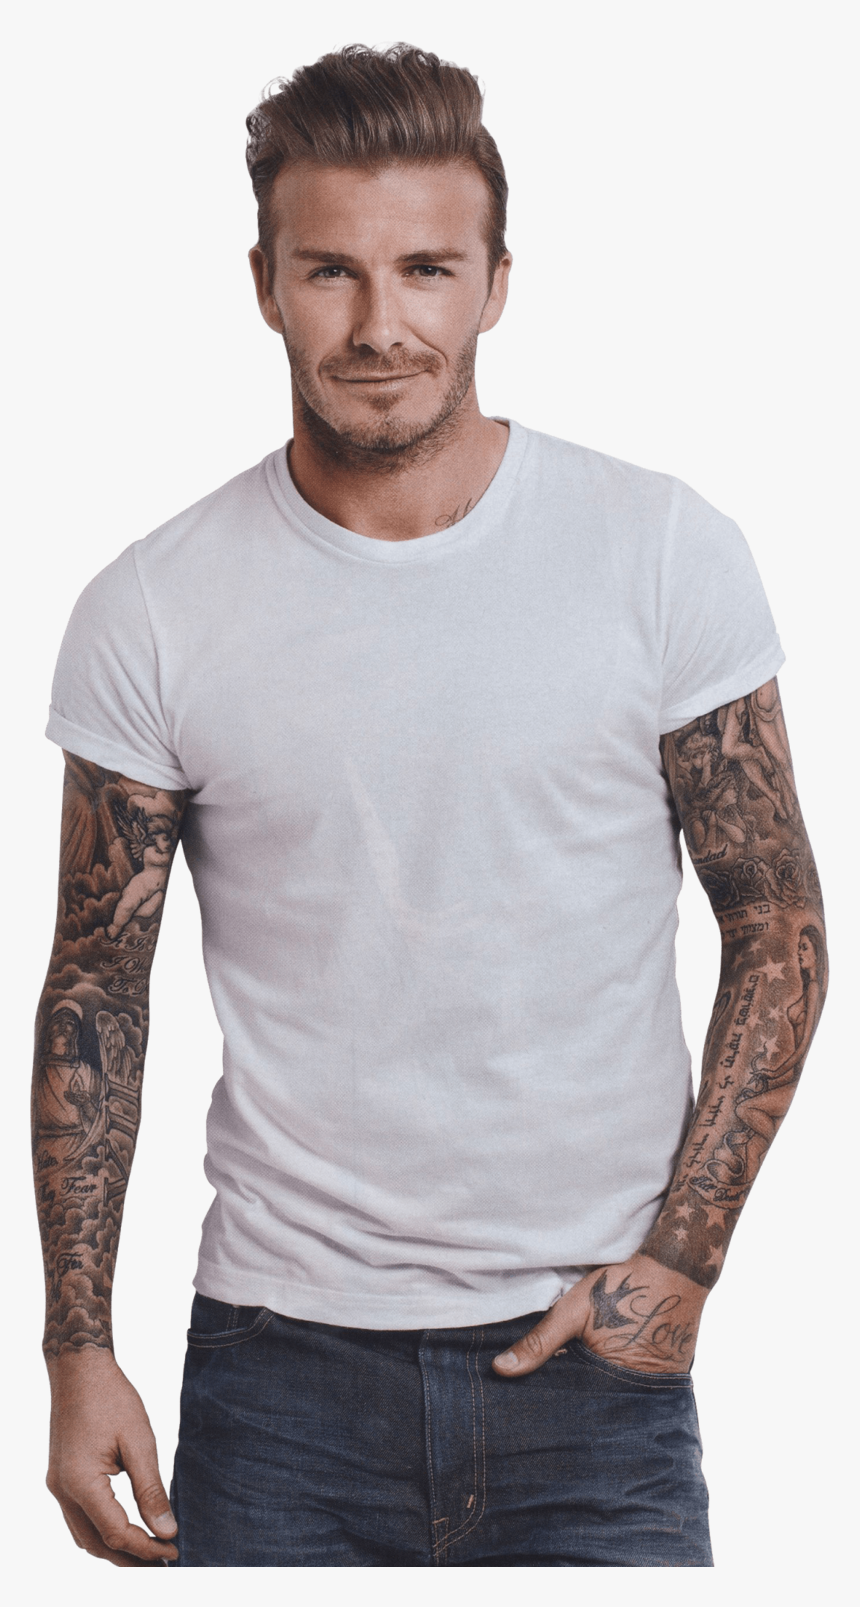 Romeo Beckham channels dad David, brother Brooklyn with tattoo tribute to  girlfriend Mia Regan